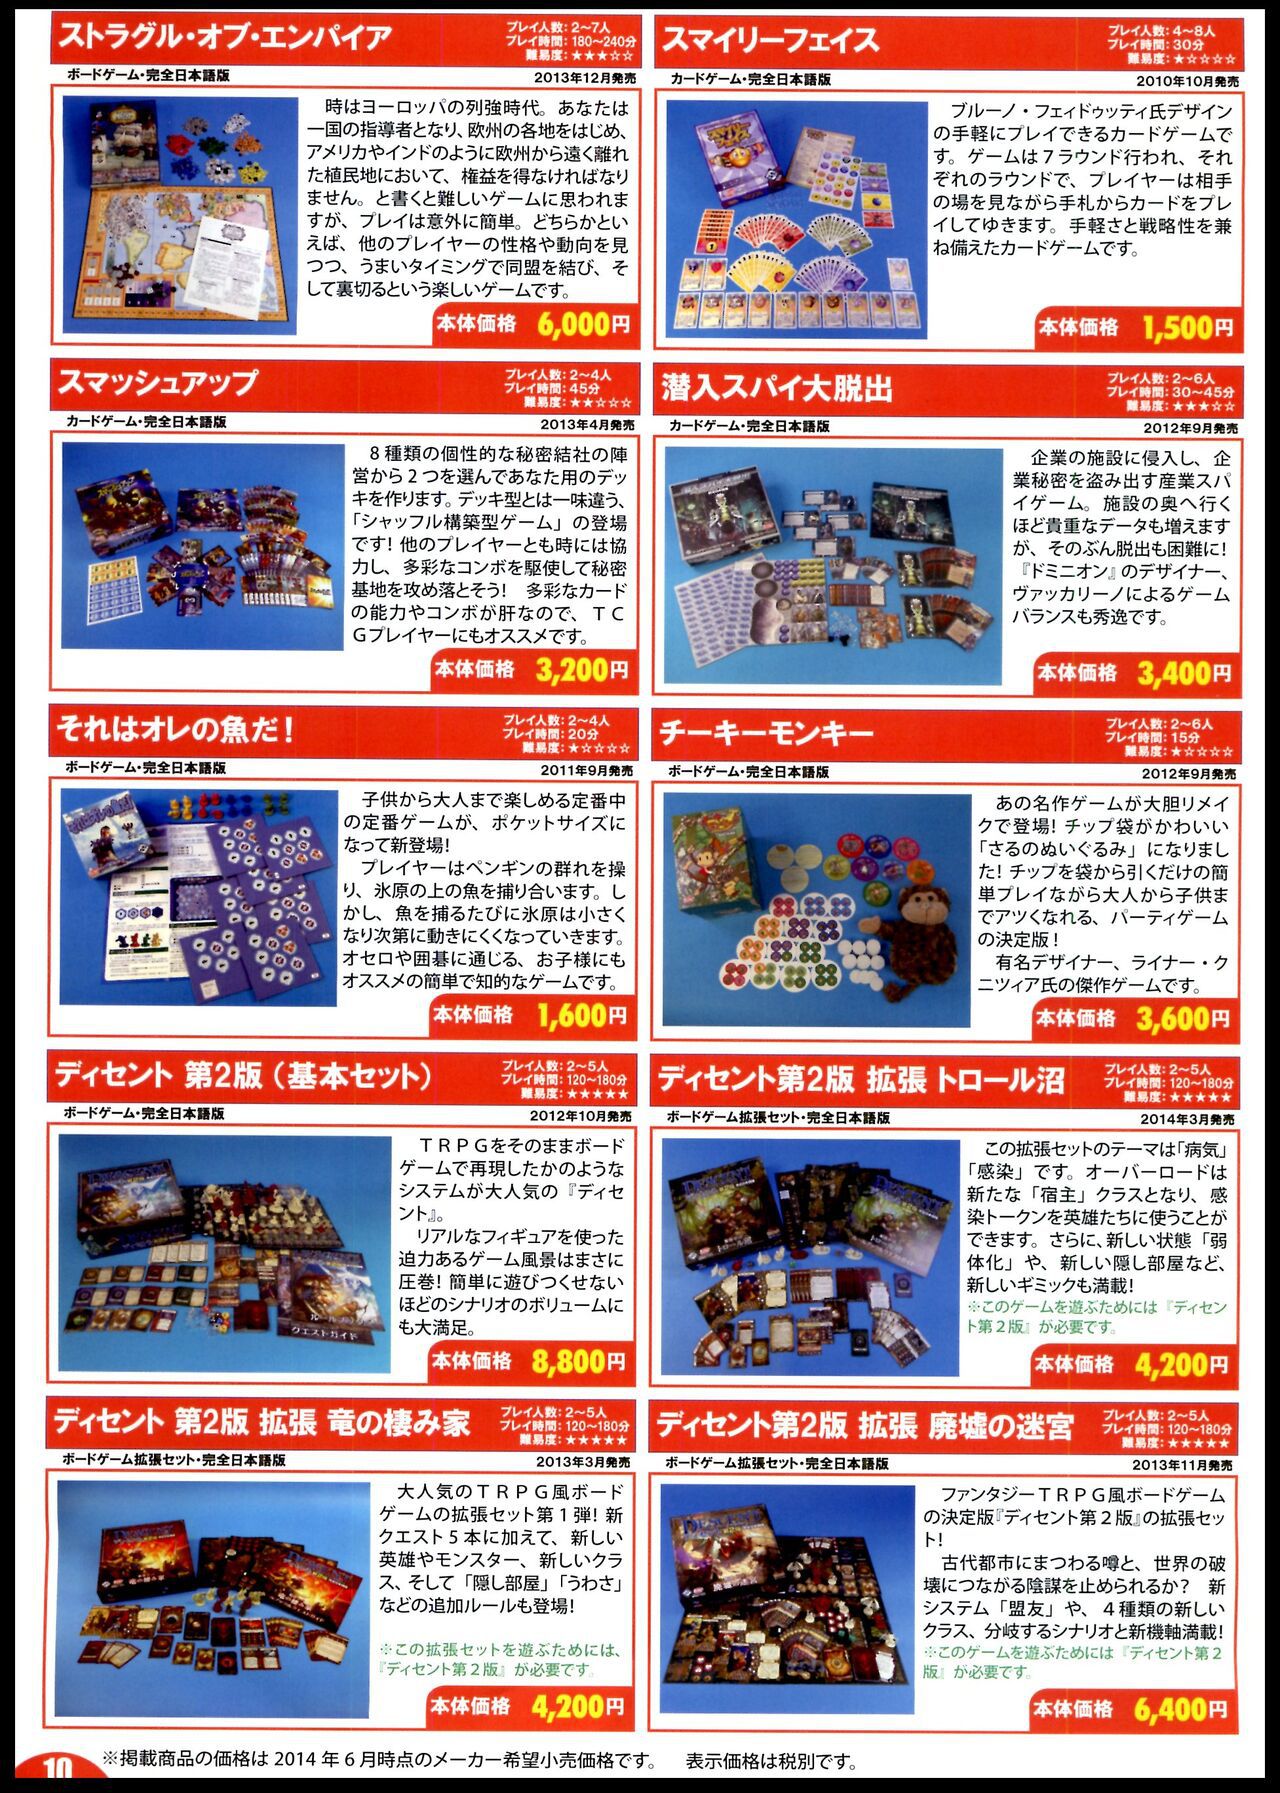 [Arclight Games] Board game catalog 2014 Summer - Autumn [アークライト] ボードゲームカタログ 2014 夏-秋 10